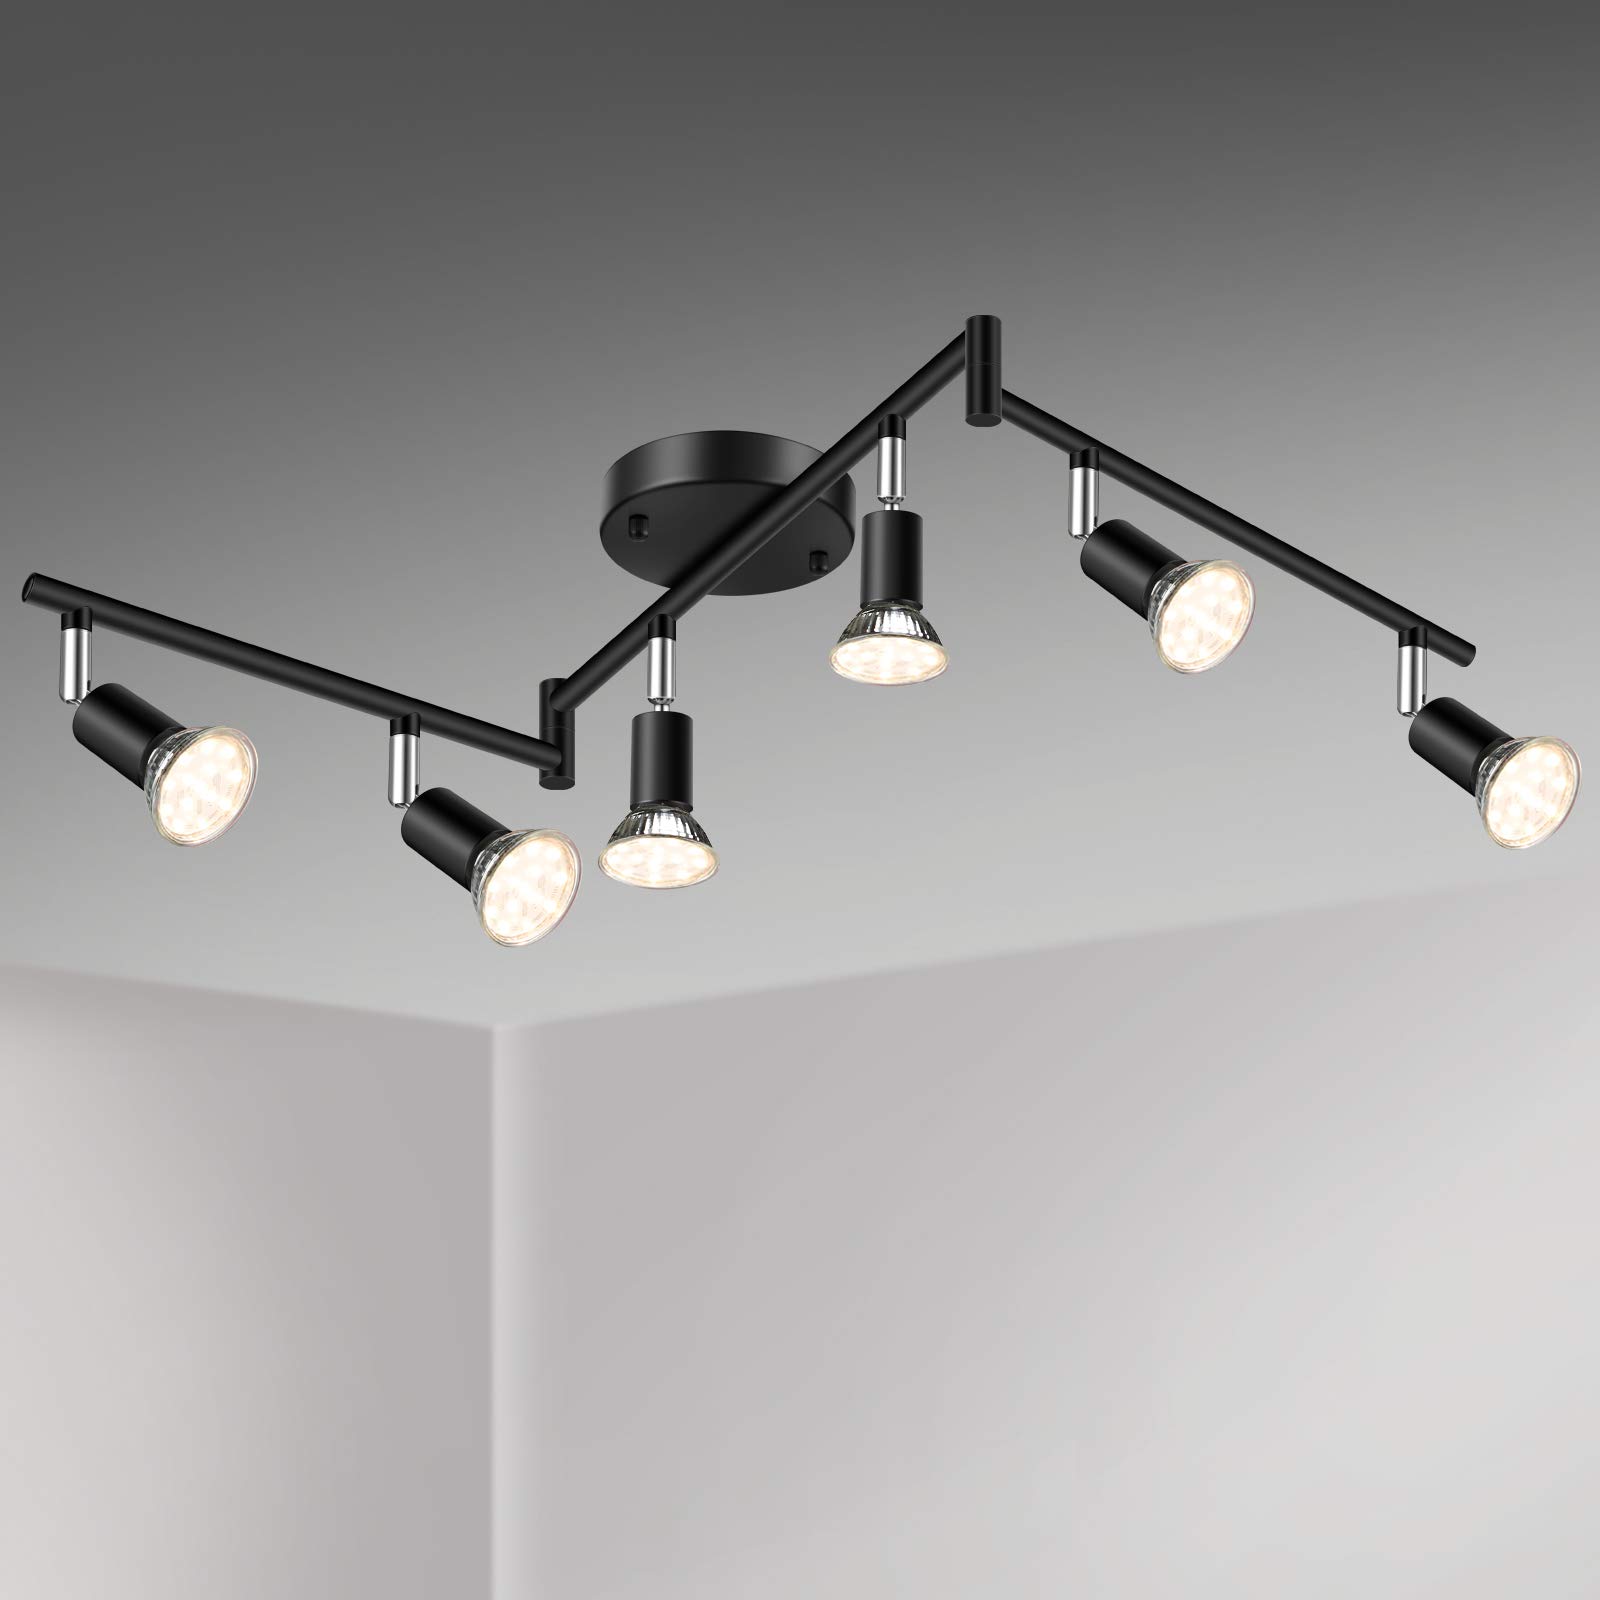 Unicozin Led 6 Light Track Lighting Kit, Black 6 Way Ceiling Spot Lighting, Flexibly Rotatable Light Head, Track Light Included 